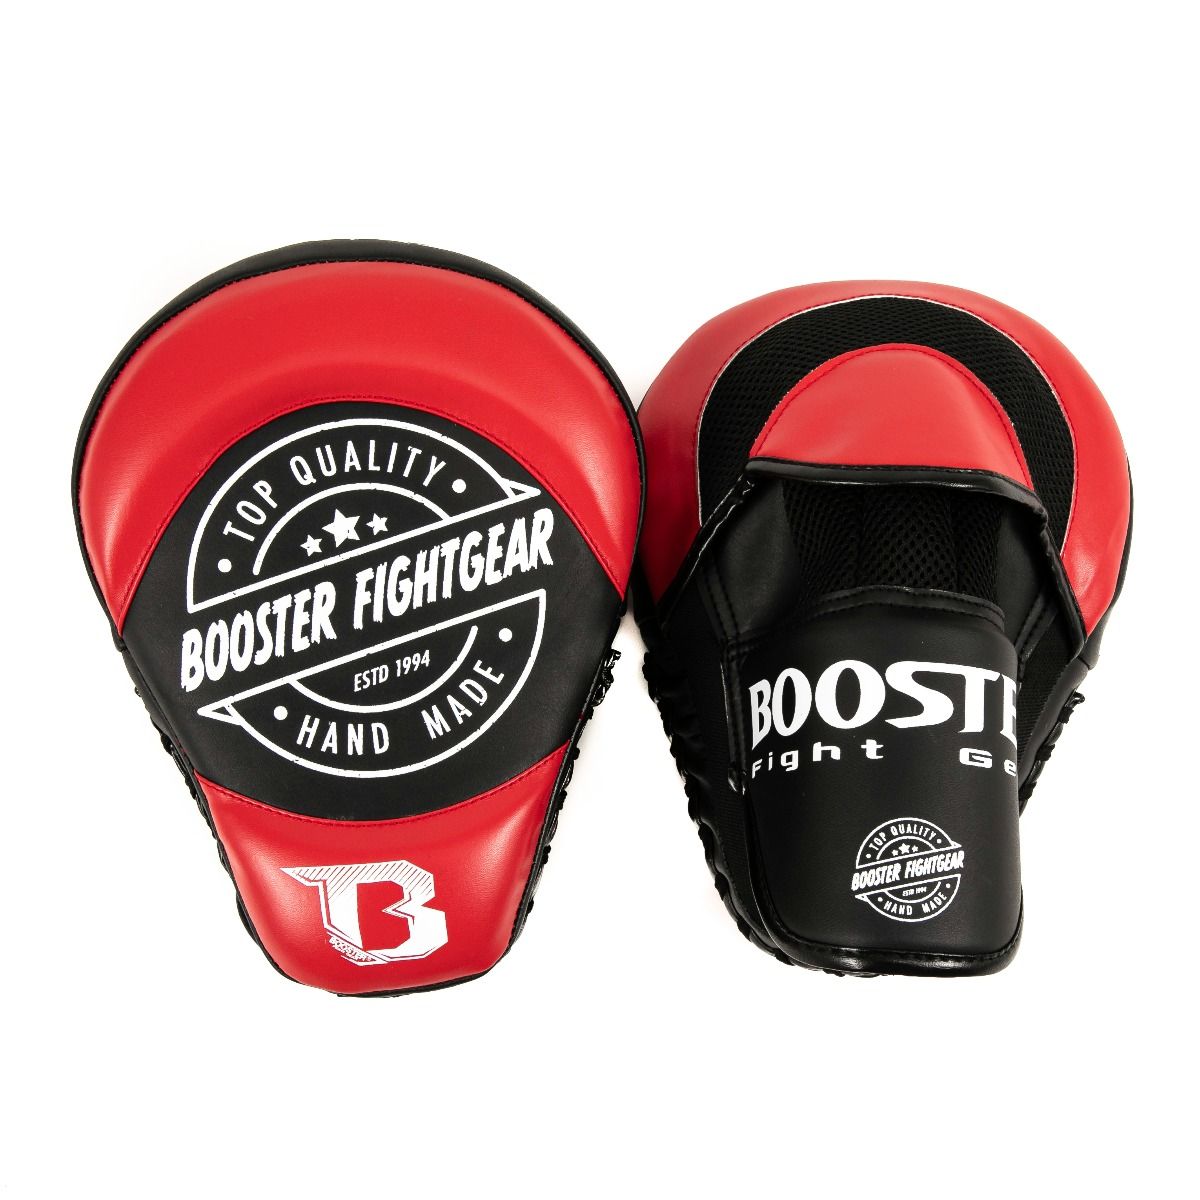 Booster Fightgear -  PML BC 4 - handpads